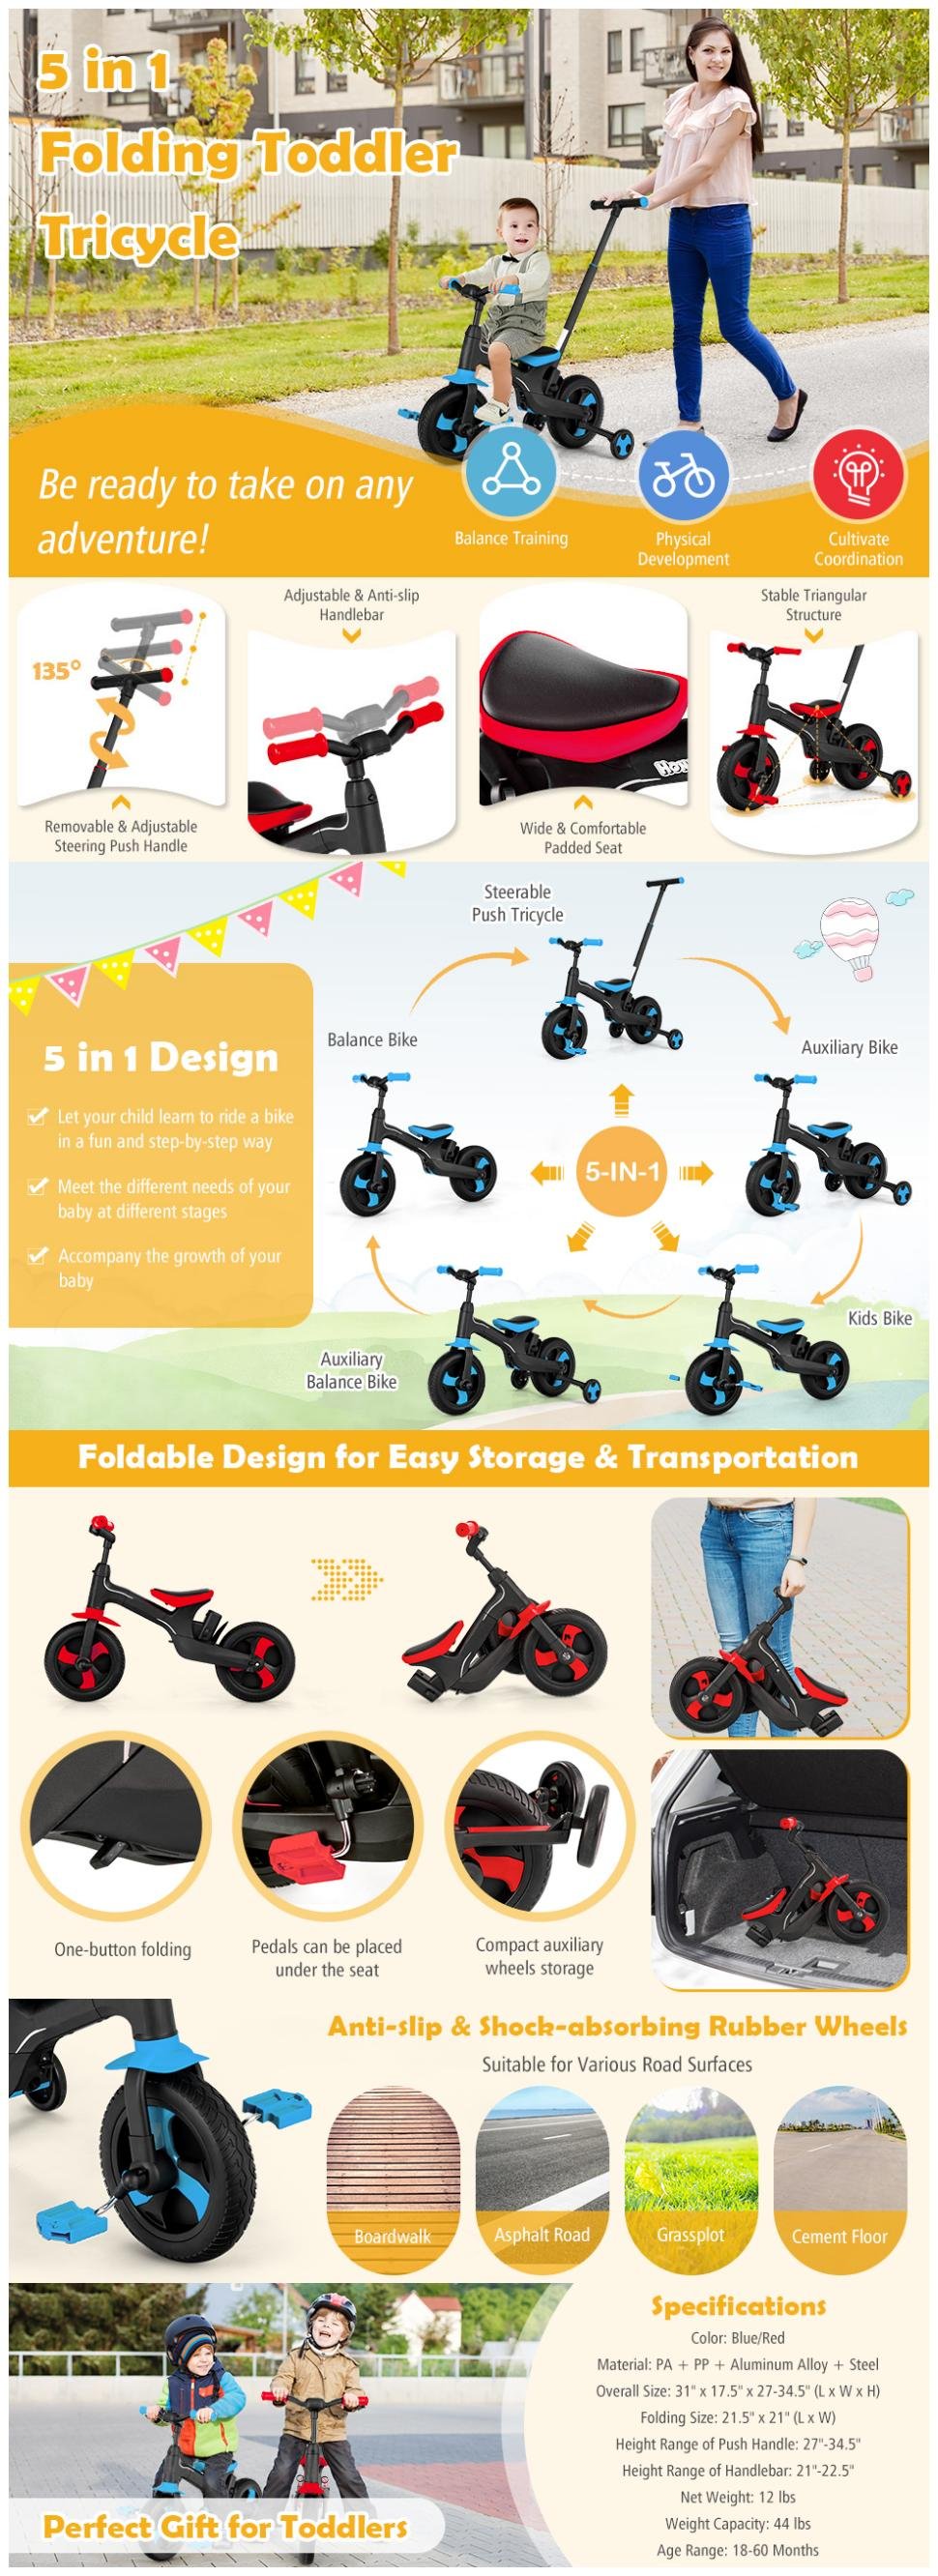 5-in-1 Multifunctional Kids Bike with Detachable Push Handle